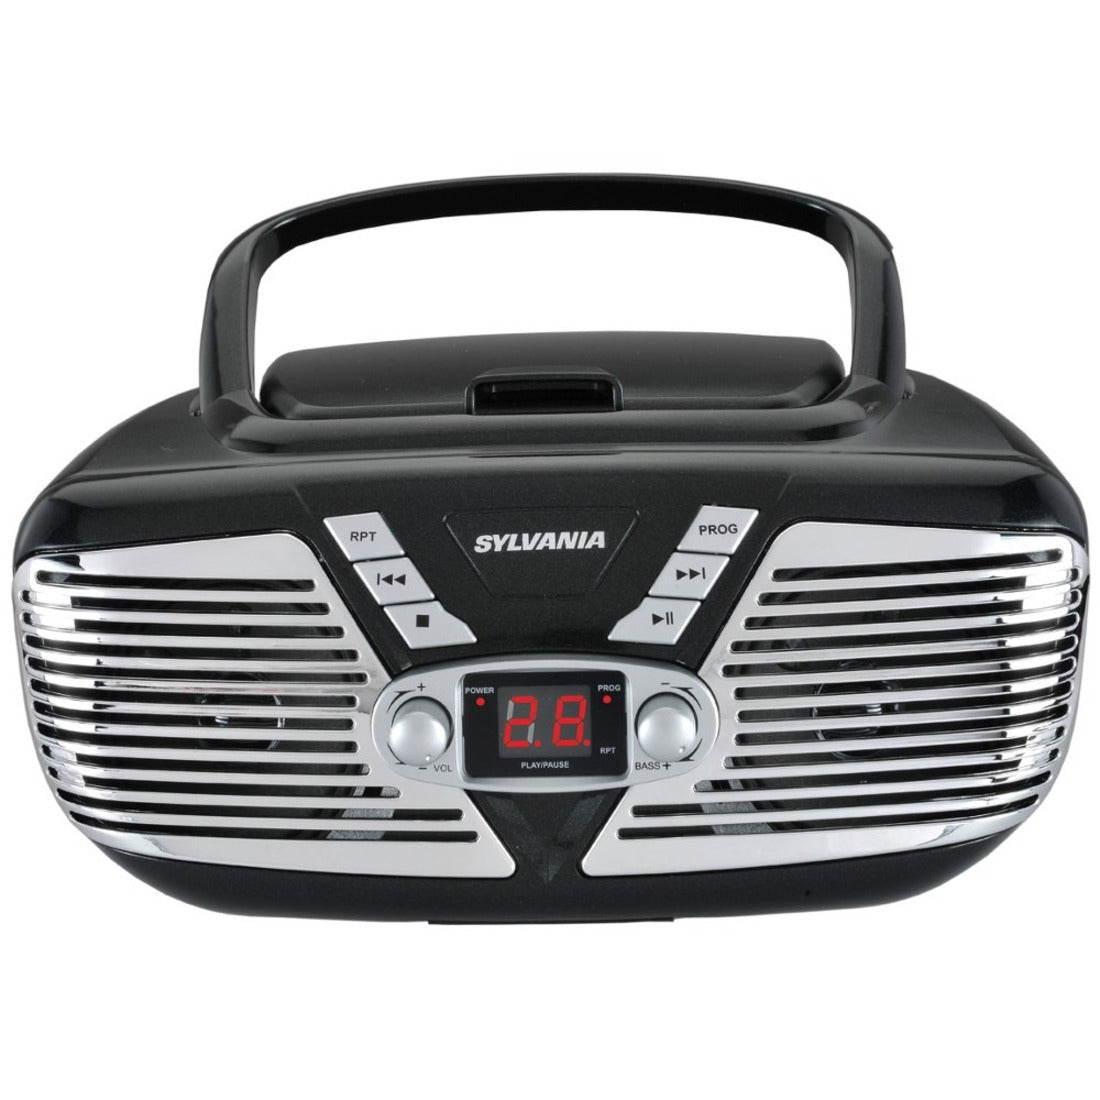 Sylvania SRCD211-BLACK Retro Portable CD Radio Boombox, Lightweight and Portable with FM Radio and LED Display